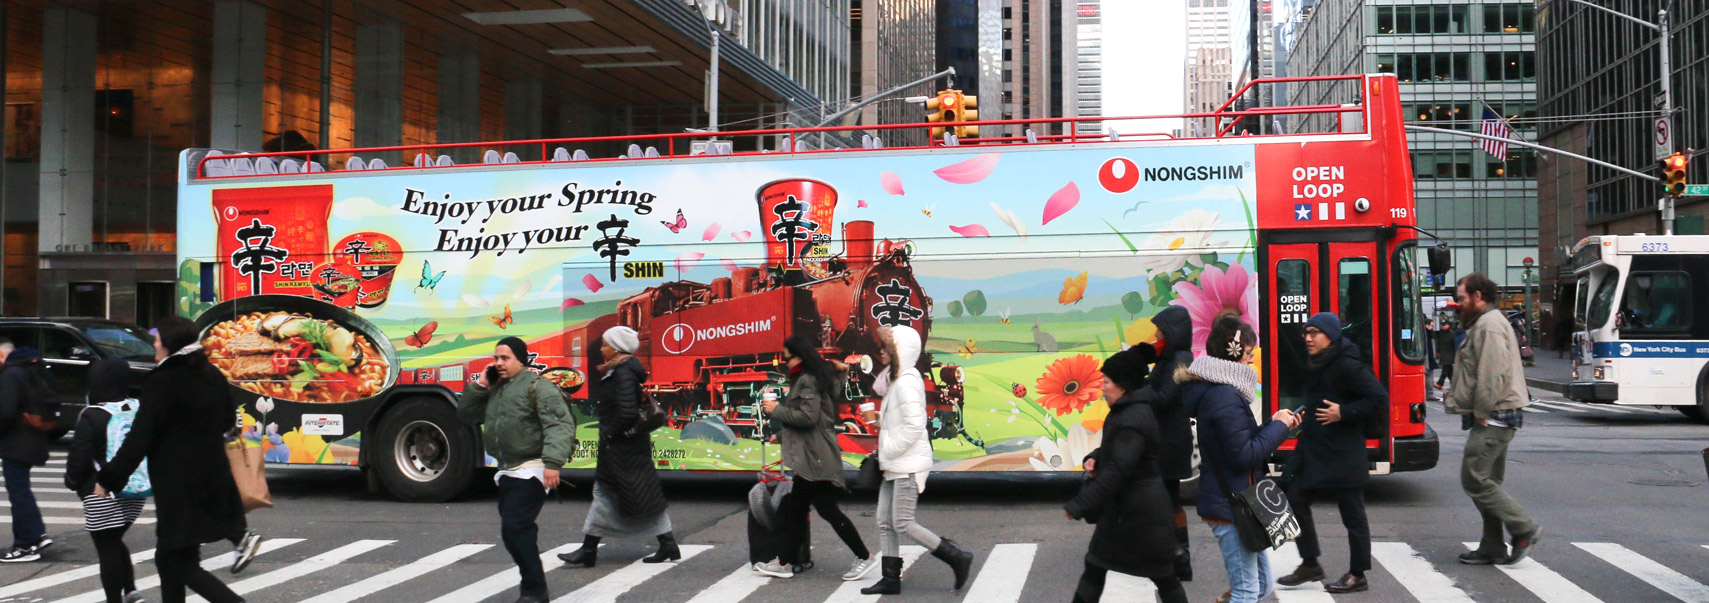 Bus Banner saying Enjoy Your Spring Enjoy Your Shin